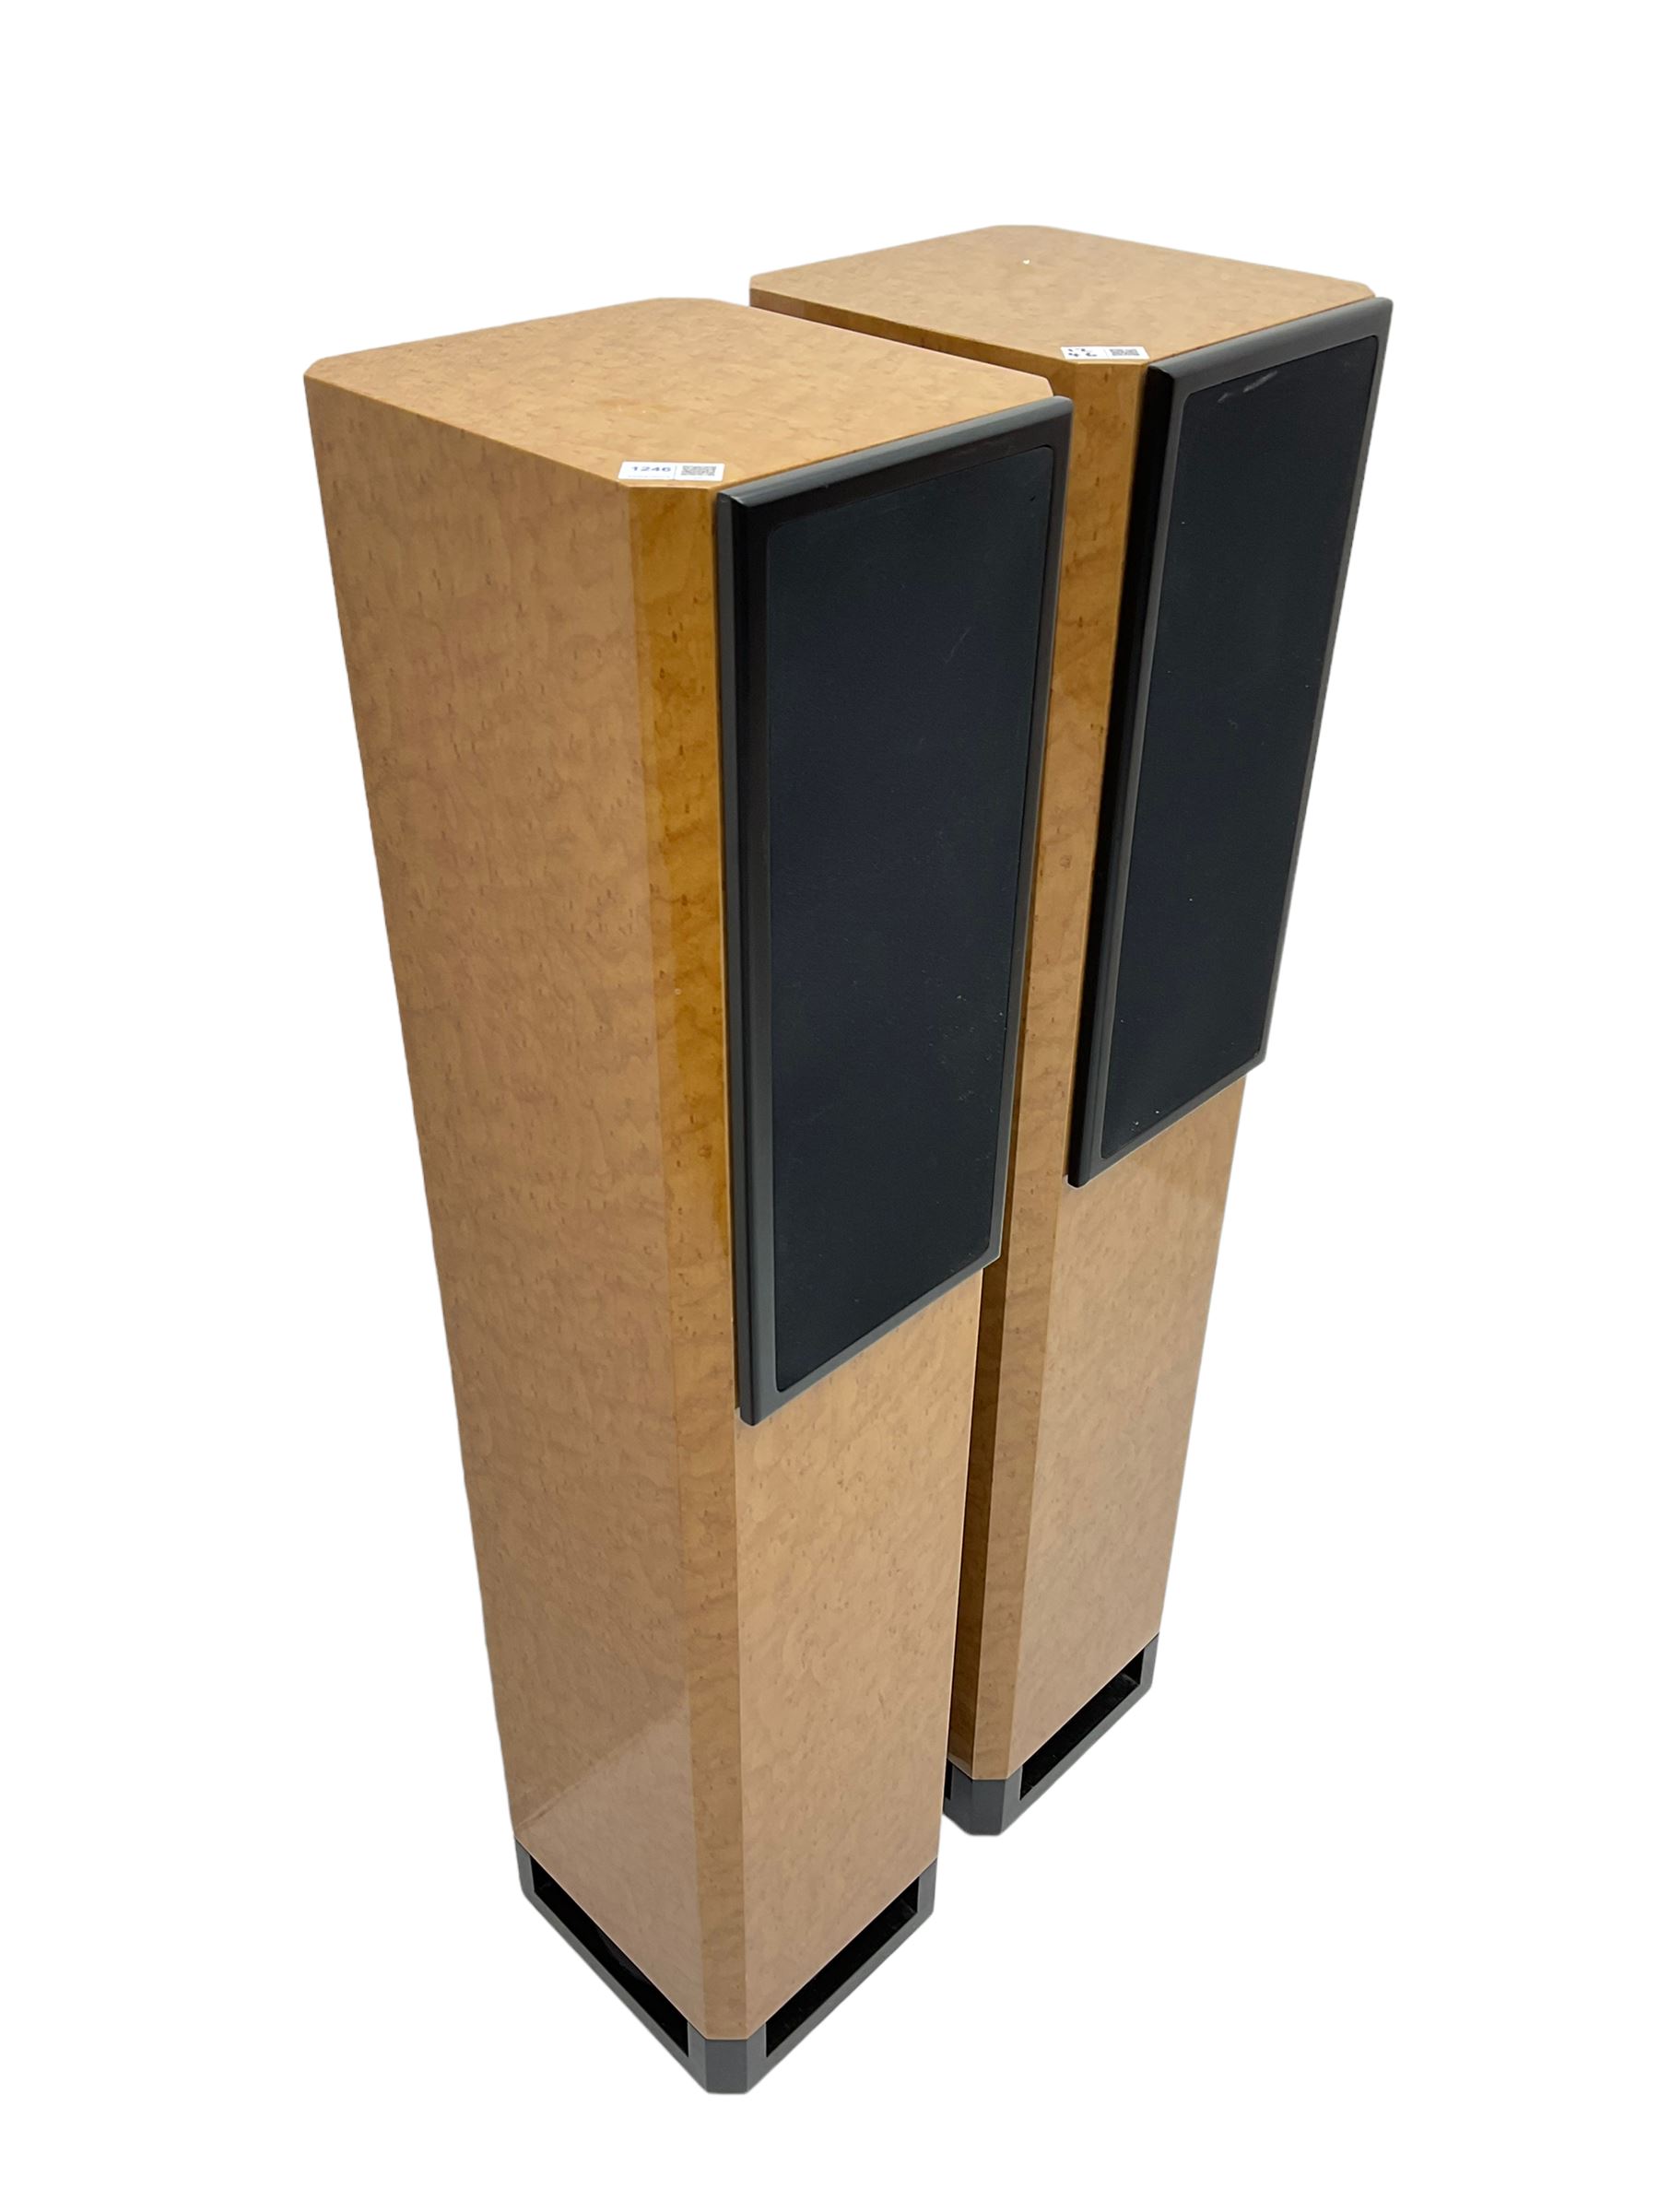 Pair Lake Audio 120W floorstanding speakers in maple finish - Image 6 of 6